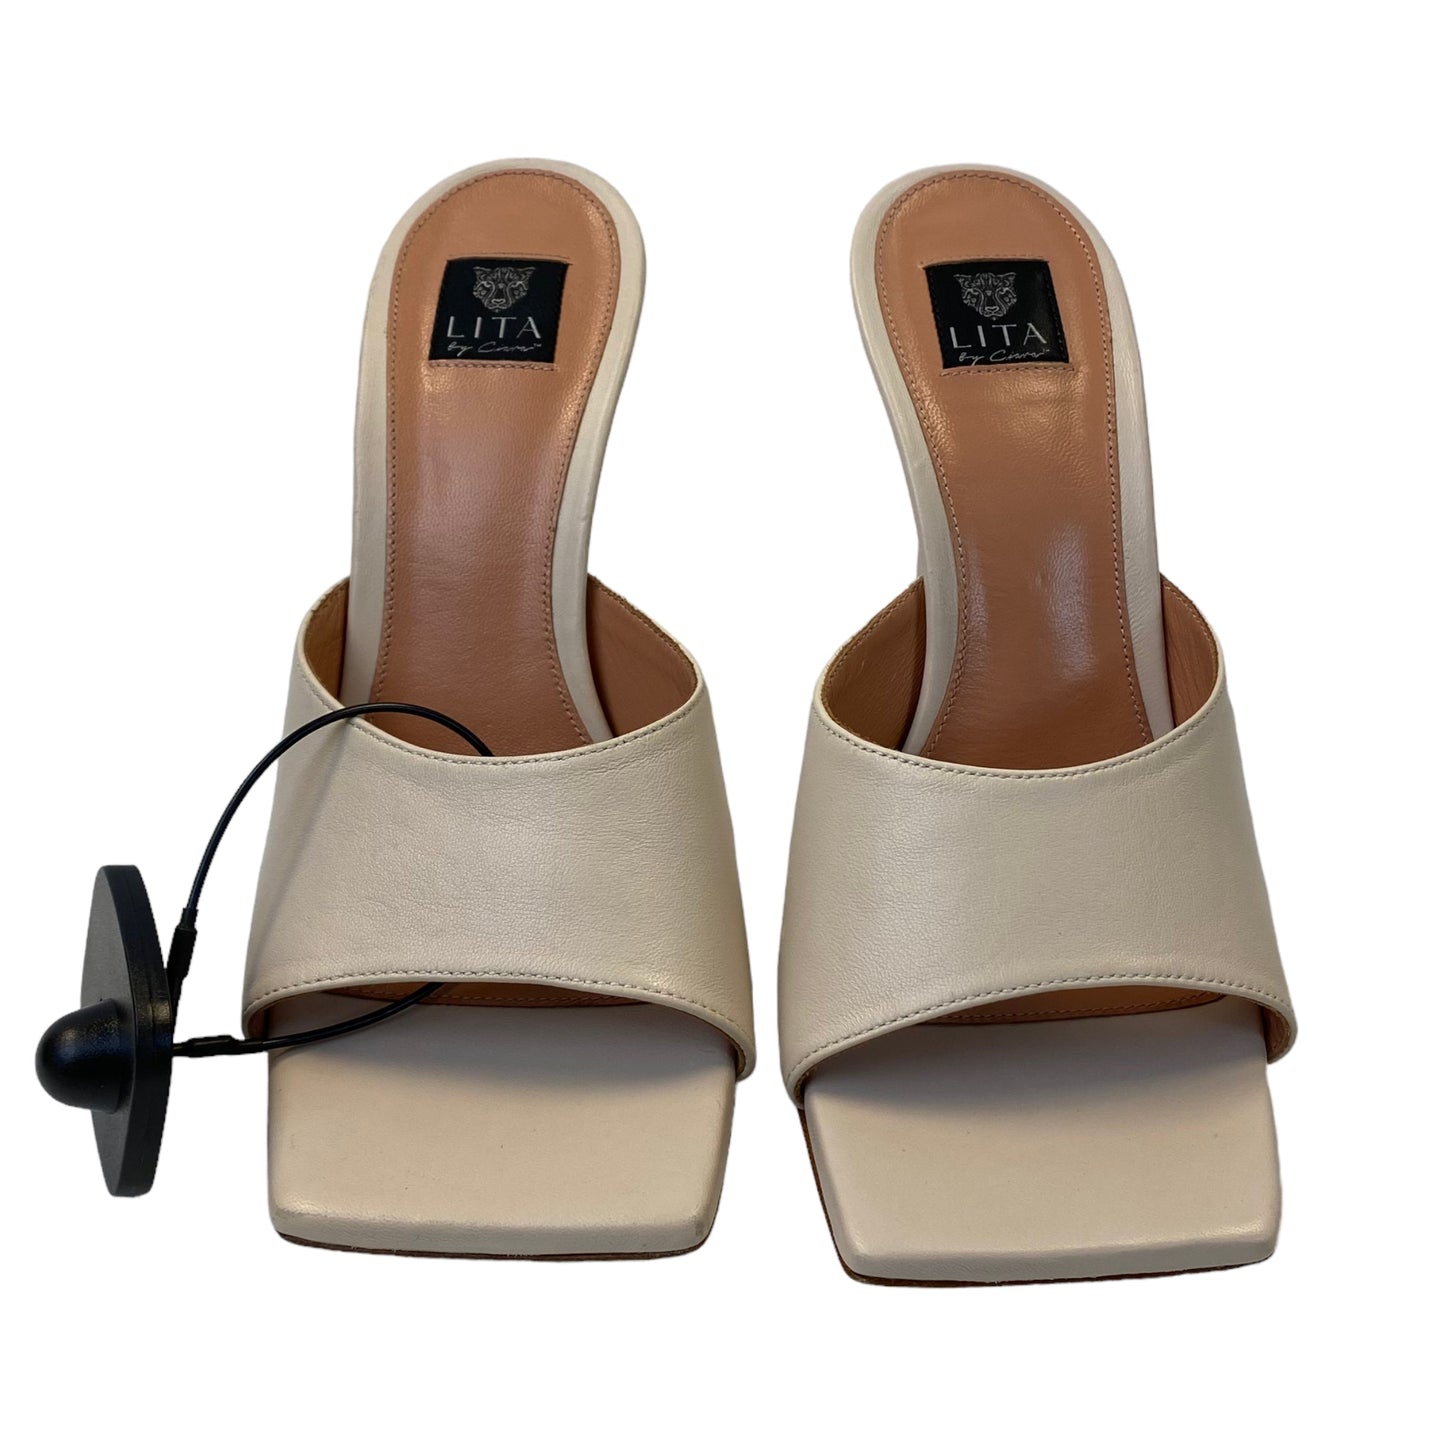 Sandals Heels Stiletto By Cma  Size: 6.5